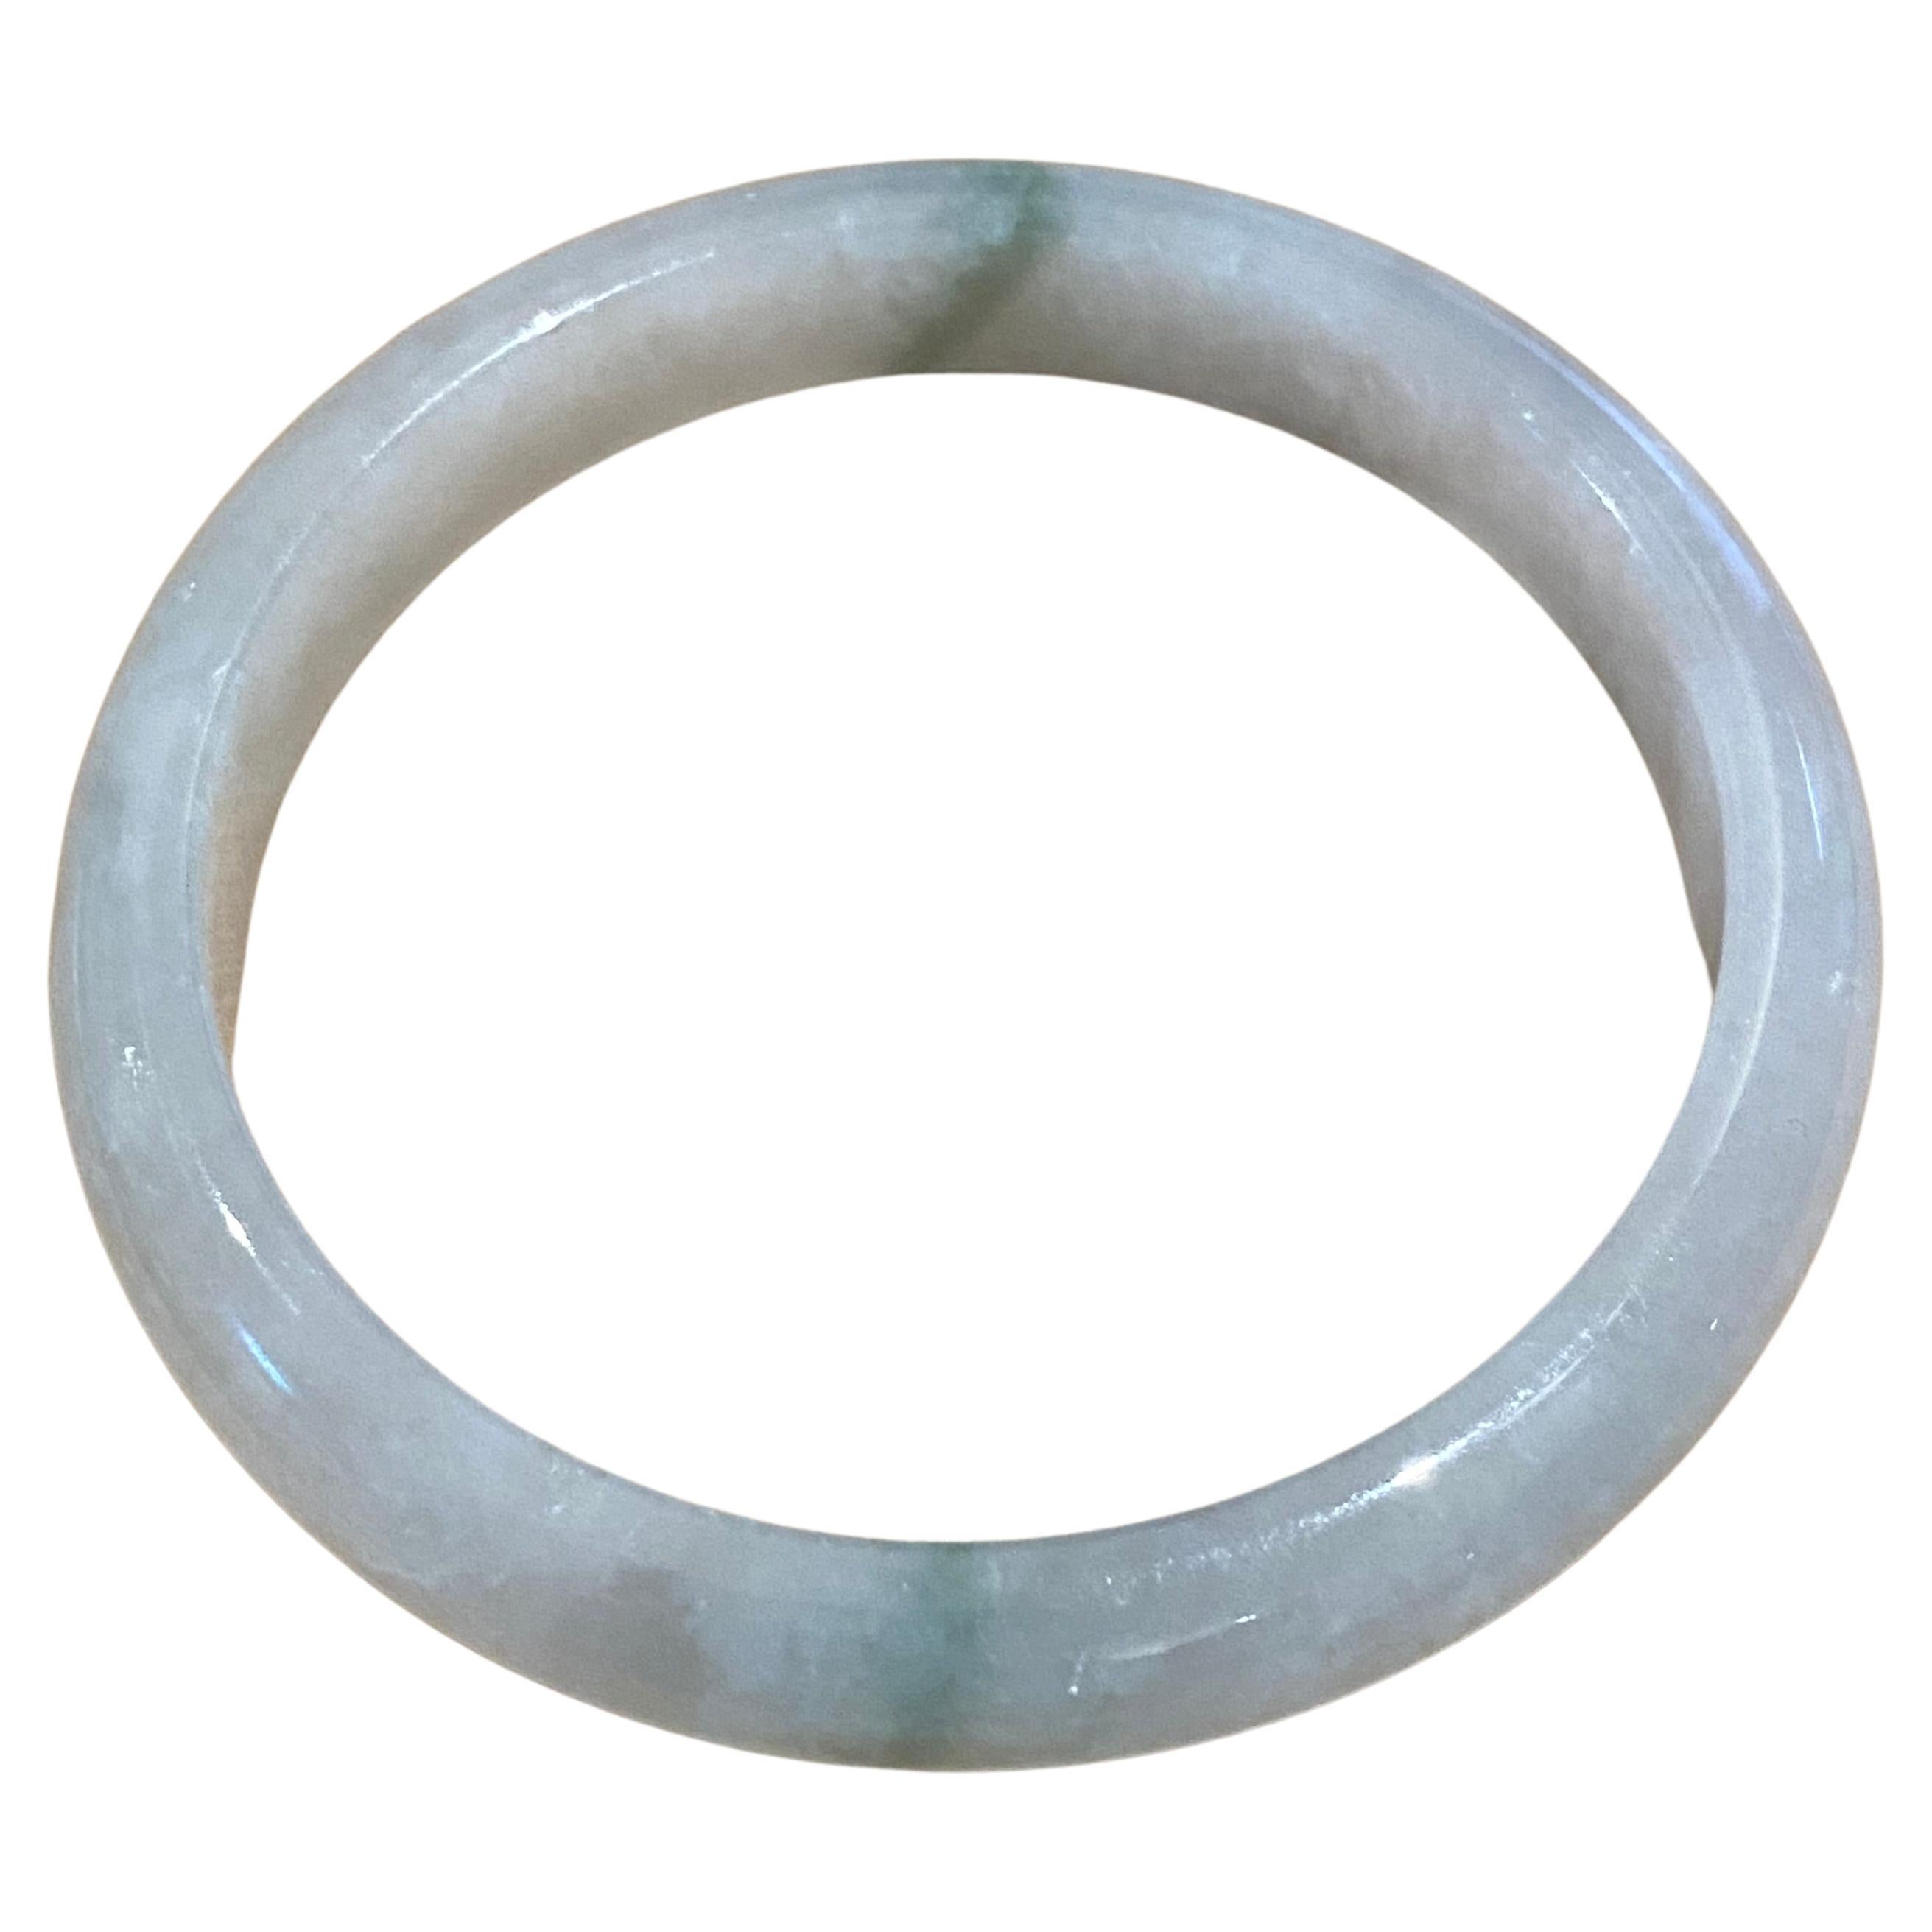 Type A Jadeit-Armreif, grün-grau lackiert, 37.1 g, 20 cm, Durchmesser 58 mm. im Angebot